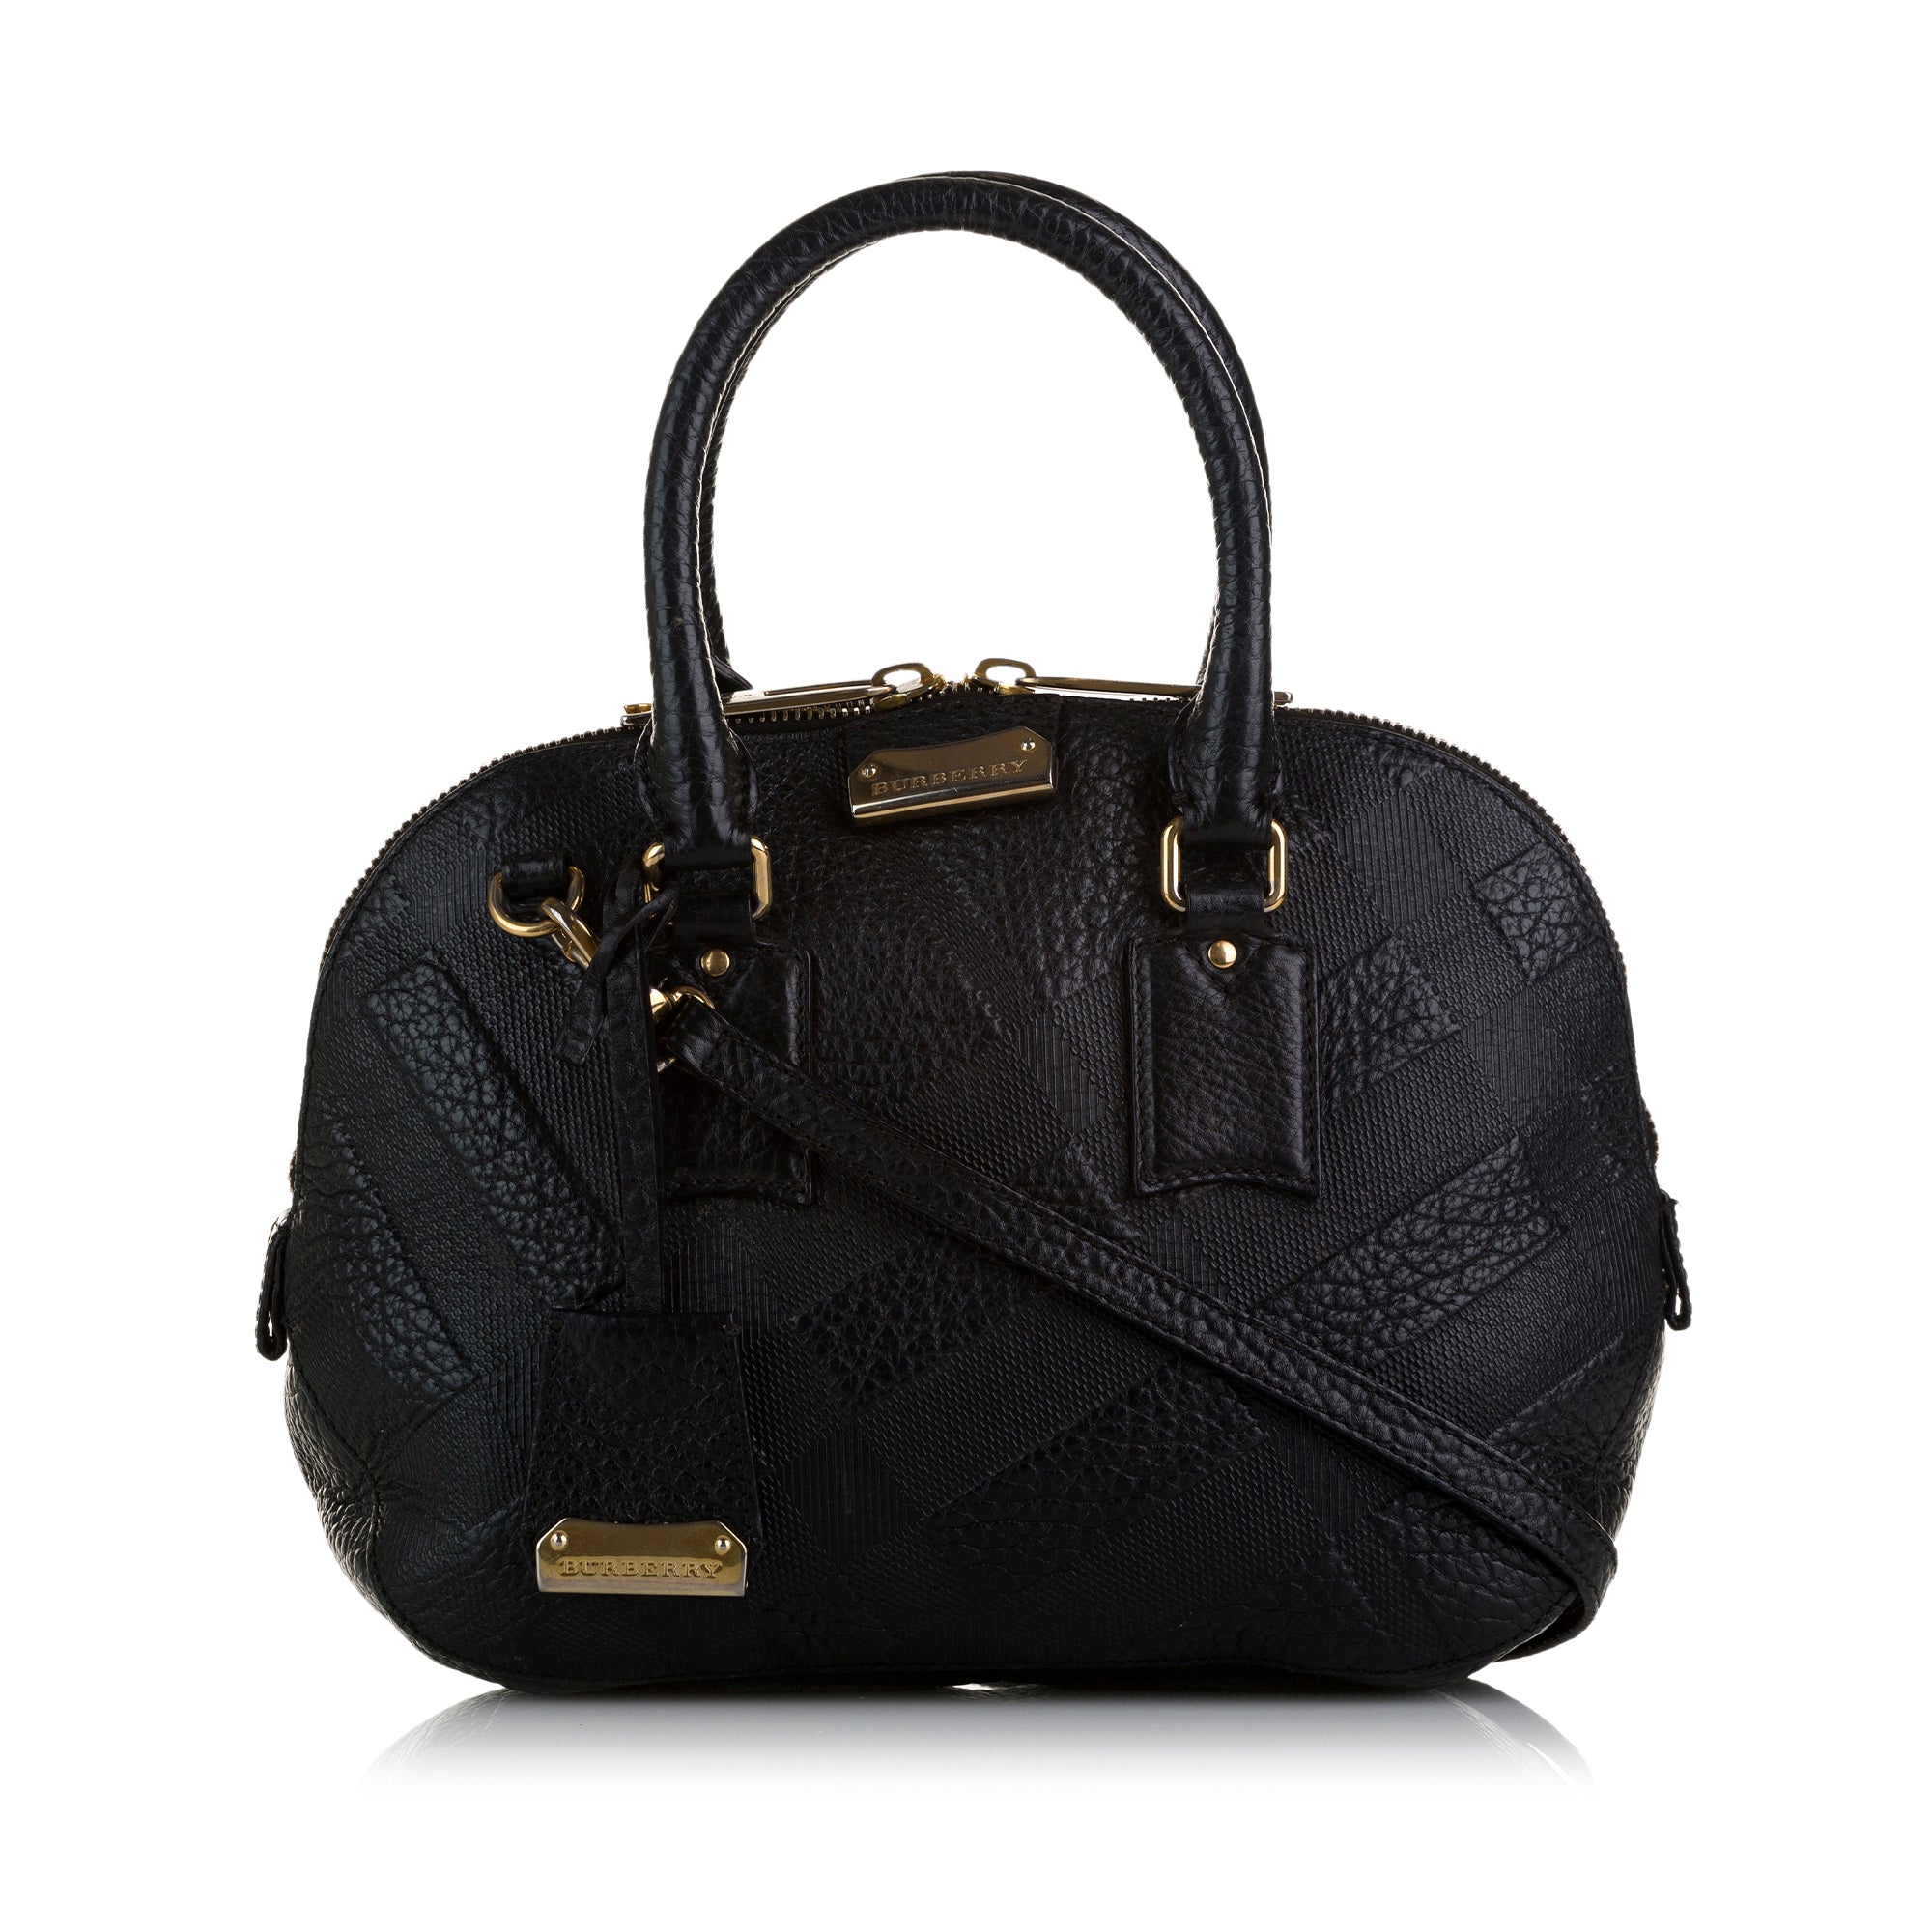 Burberry Orchard Handbag Medium Black Check Embossed Leather 